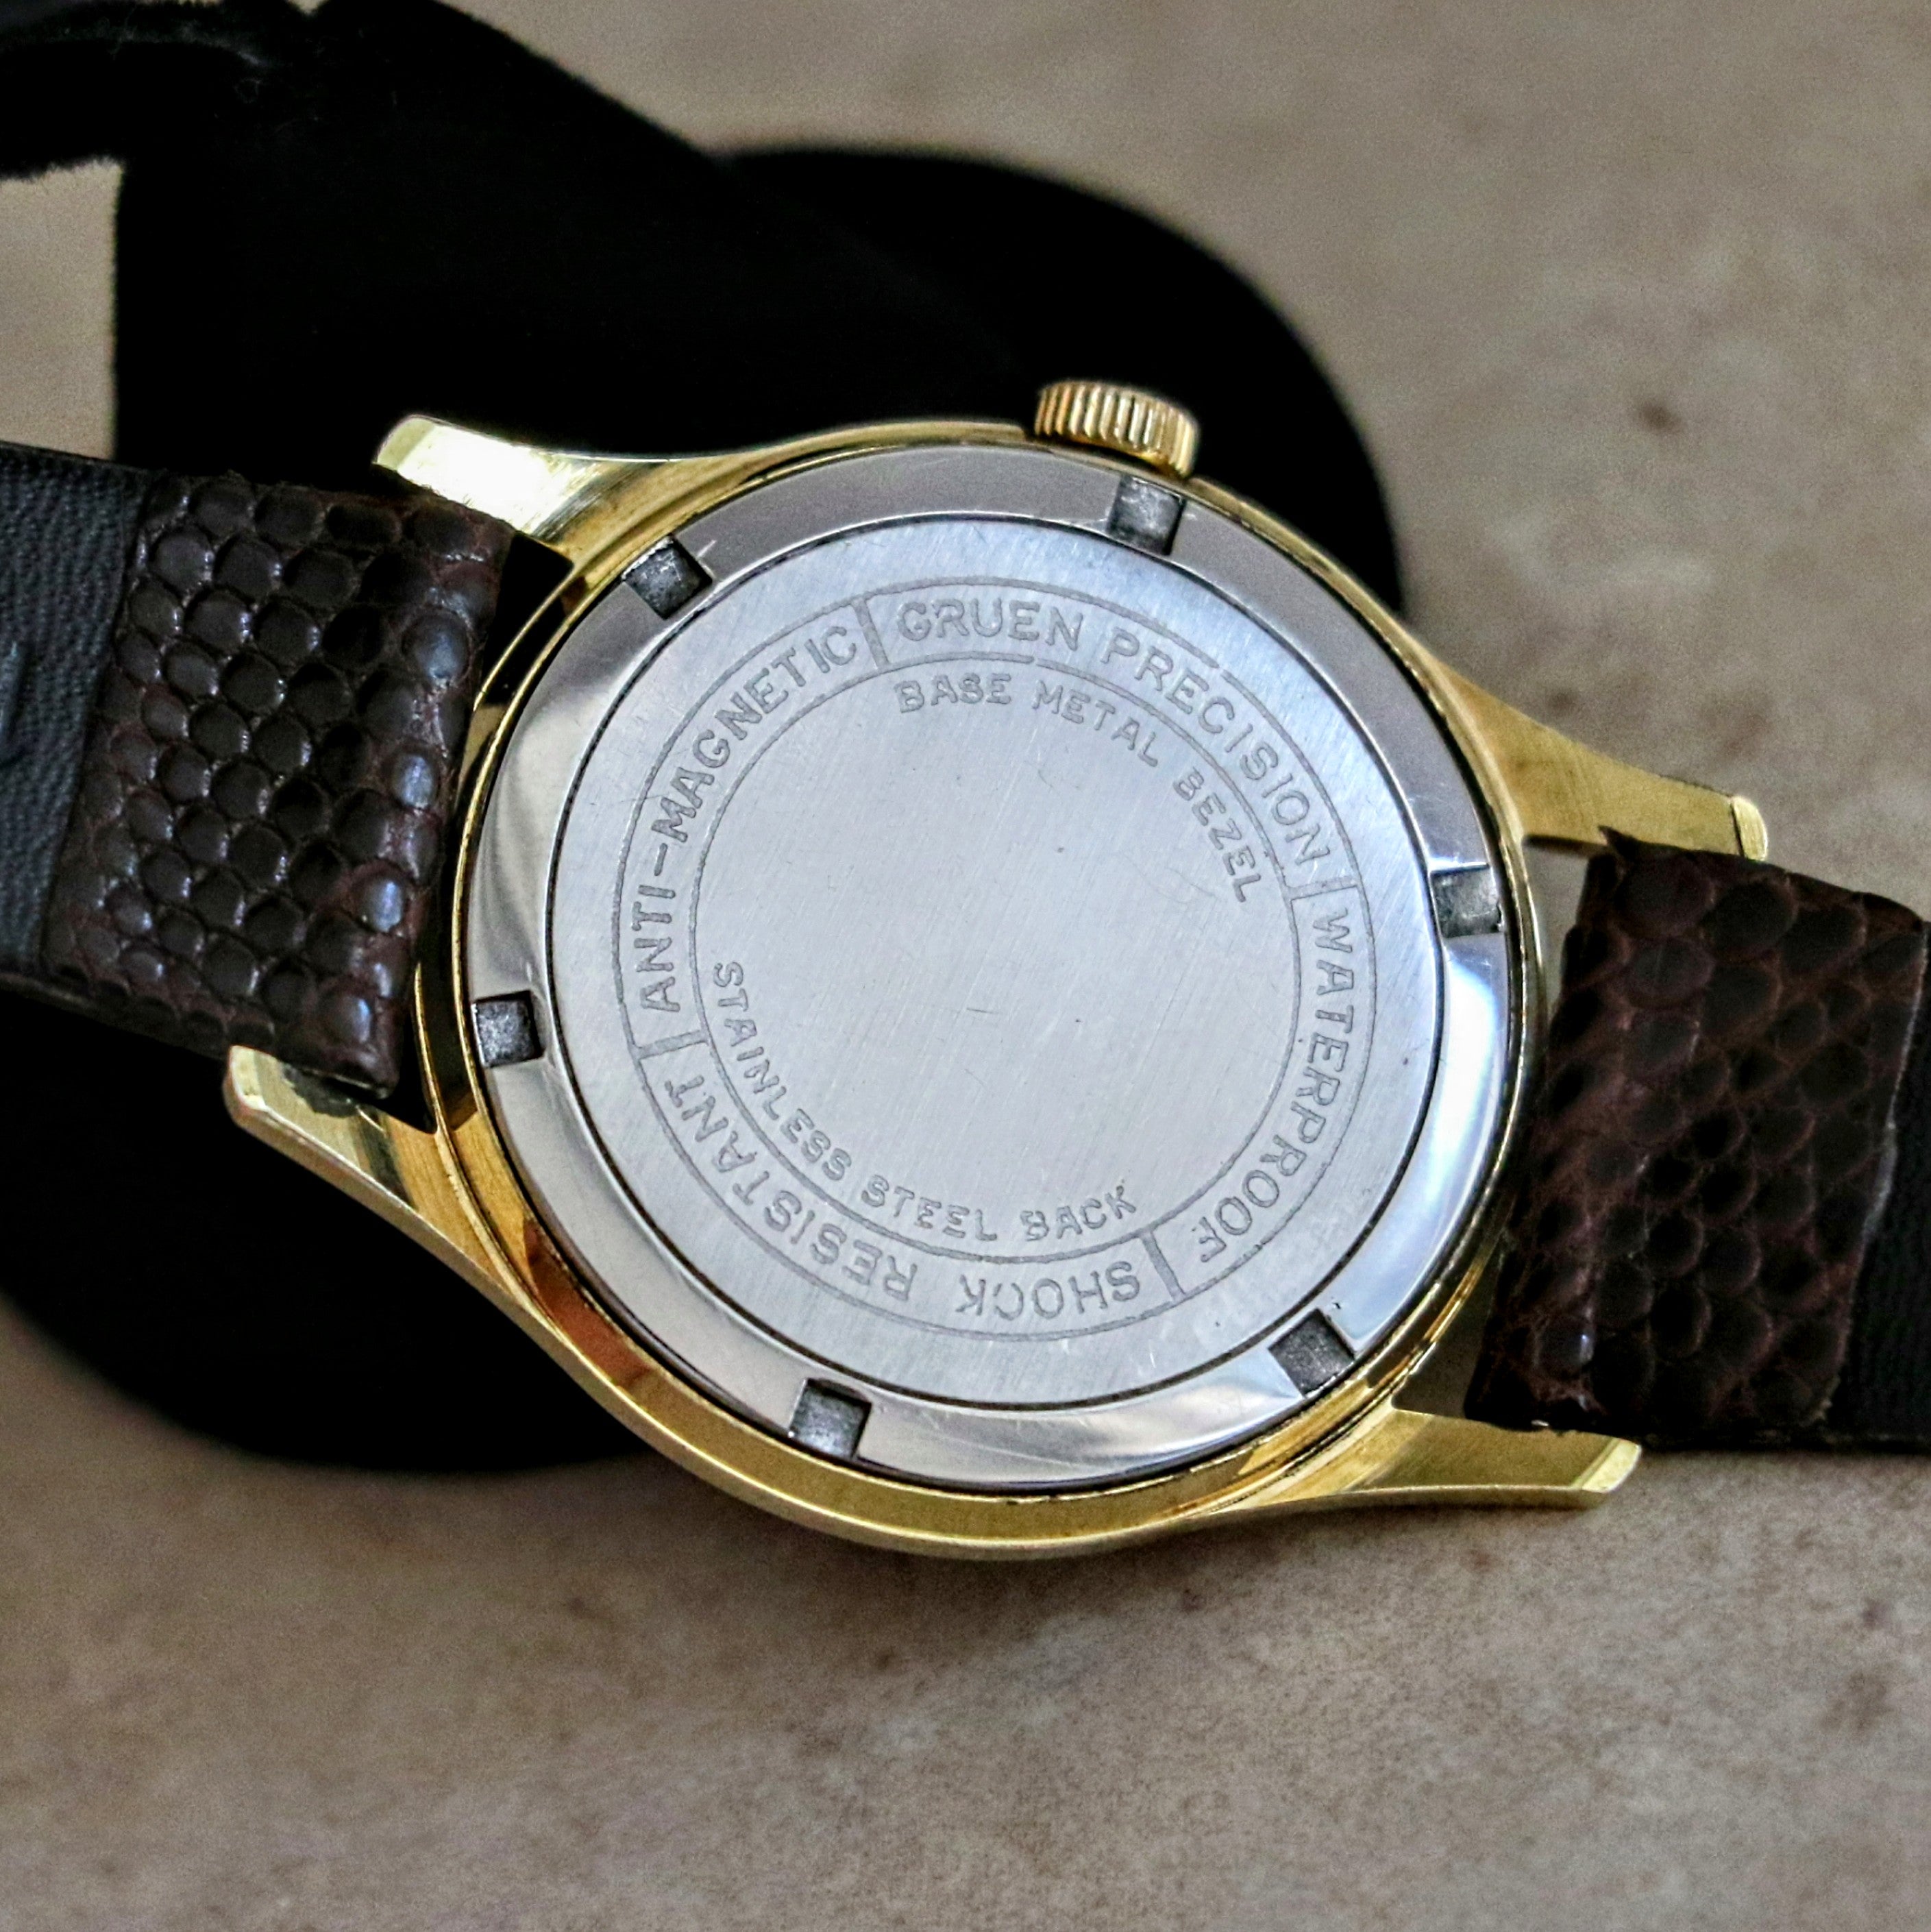 Vintage GRUEN Precision Wristwatch 17 Jewels Swiss Caliber N510SS Watch